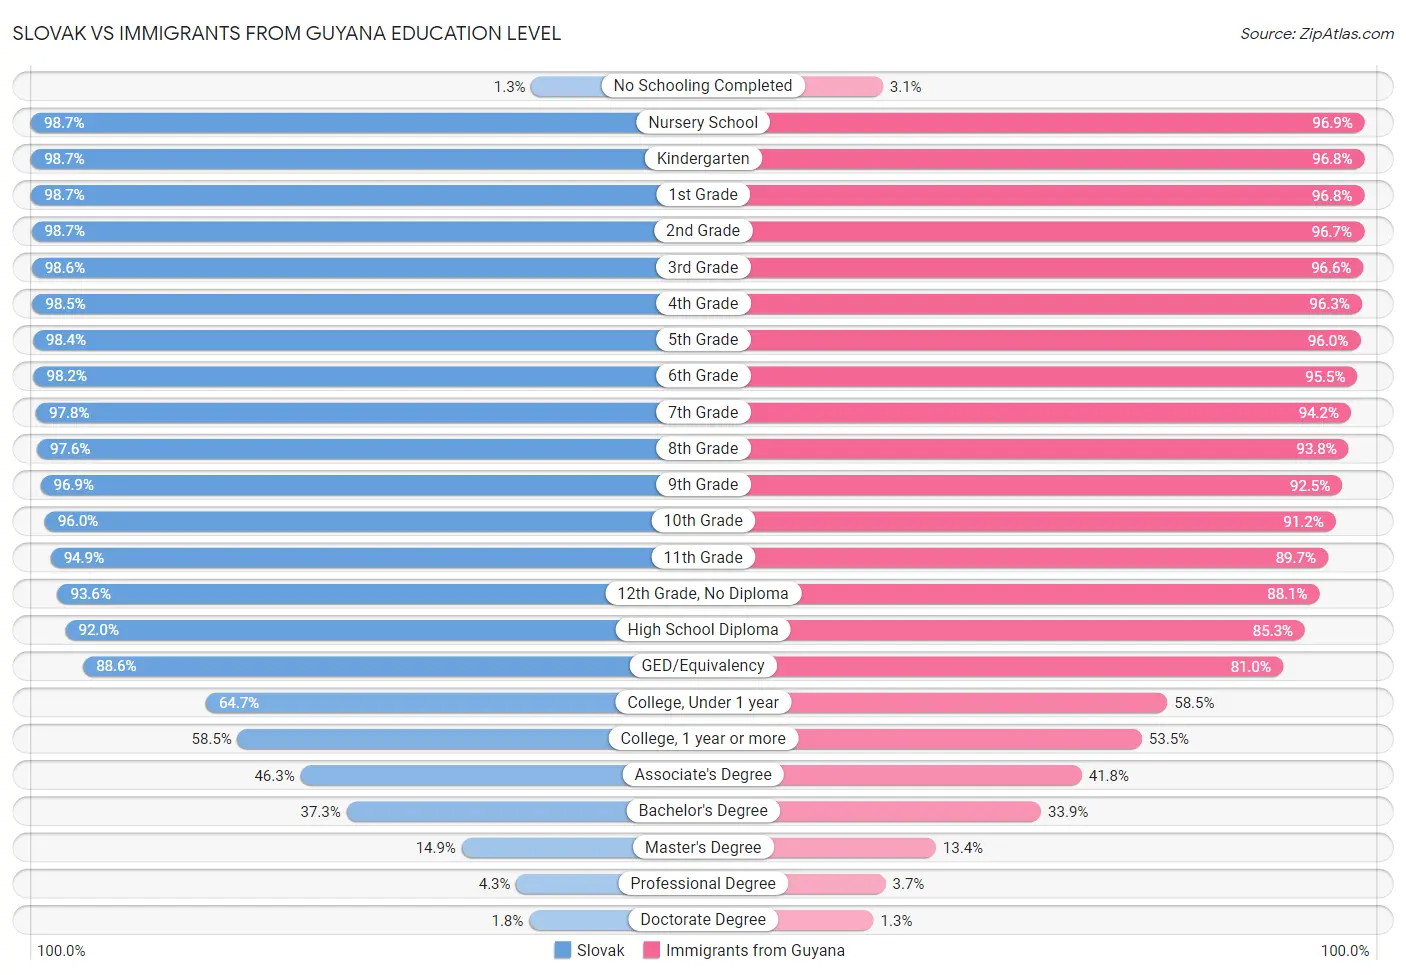 Slovak vs Immigrants from Guyana Education Level